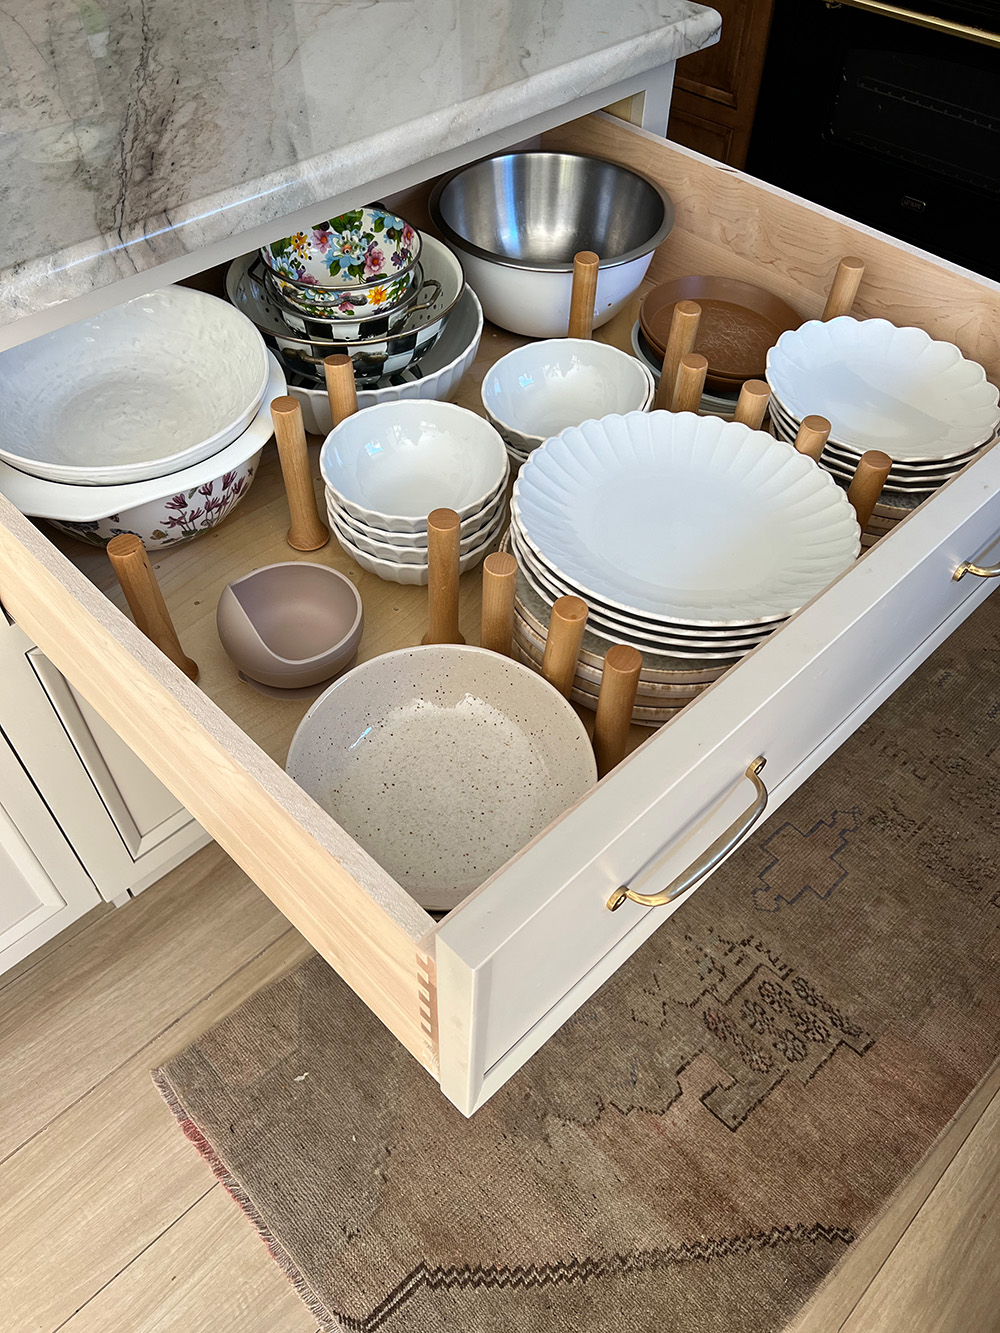 Kitchen Organization: Drawers Instead of Cabinets - BREPURPOSED